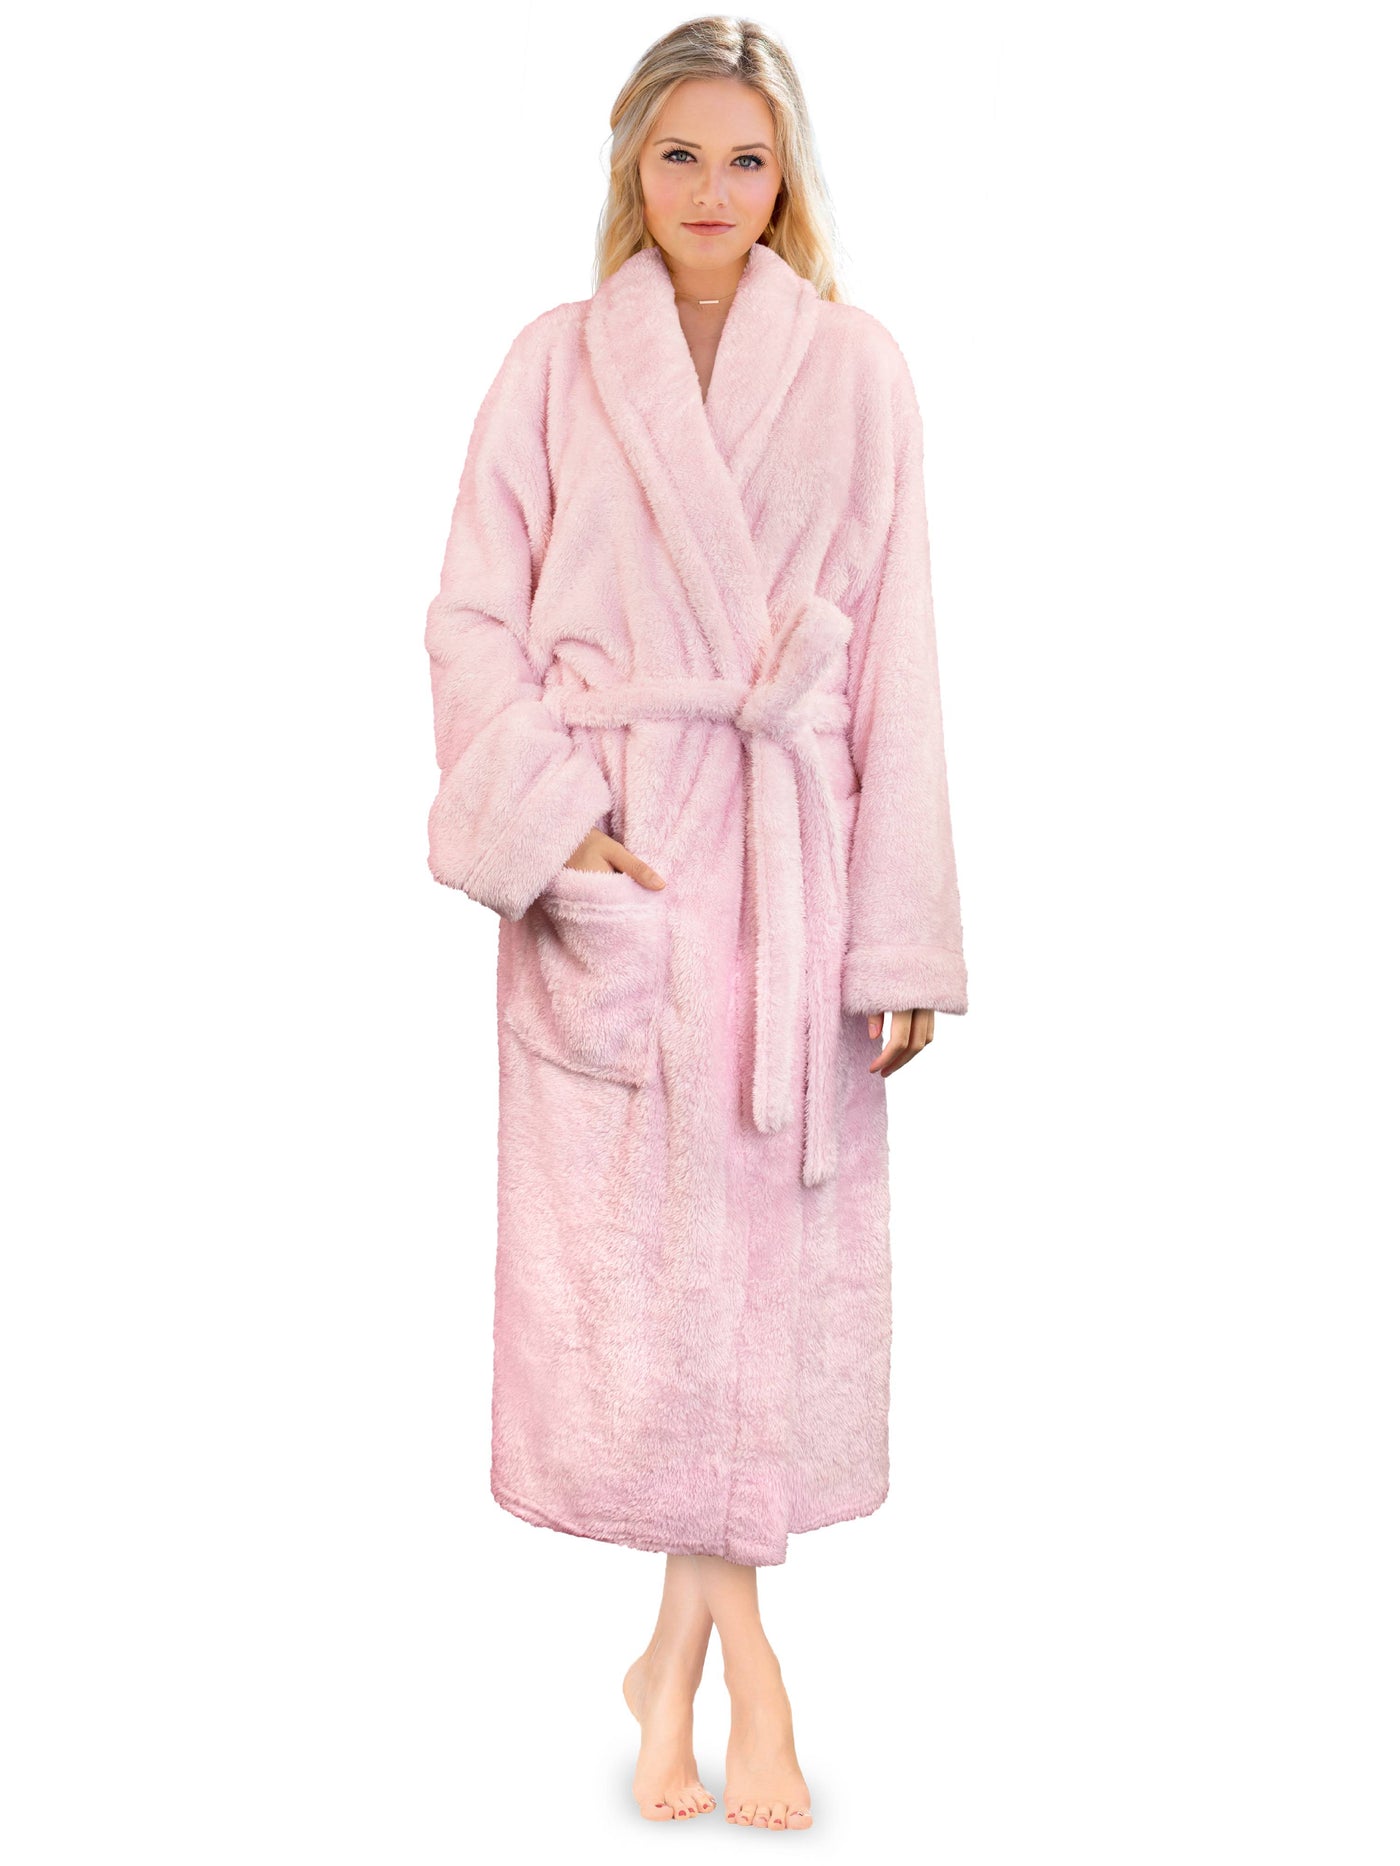 Luxury Light pink Bath Robe for Women and Men- Unisex